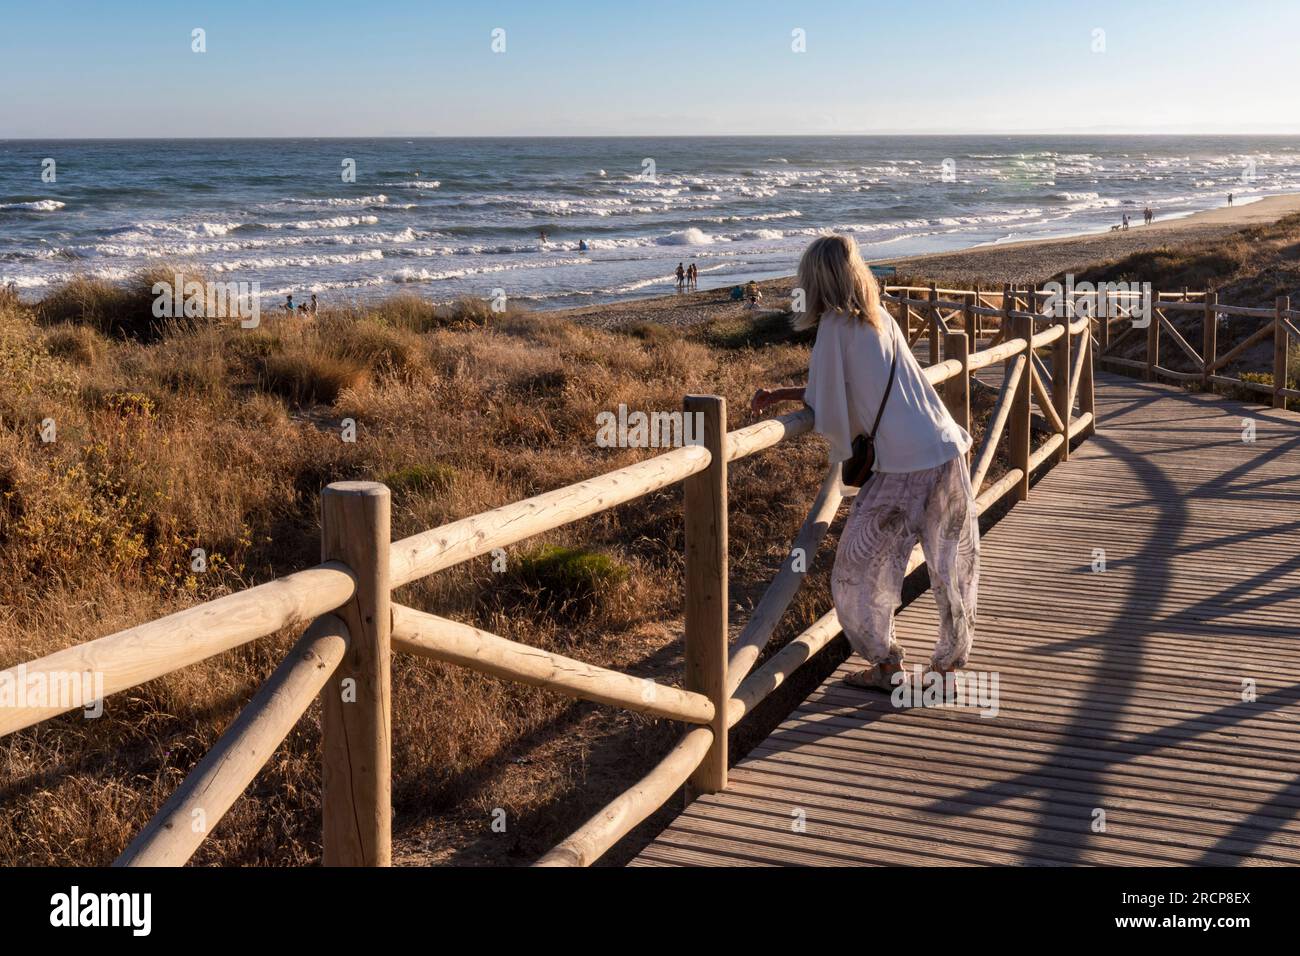 Artola Beach Boardwalk, à côté de Puerto de Cabopino, Marbella, Costa del sol, province de Malaga, Andalousie, Sud de l'Espagne. Les dunes de sable derrière le bea Banque D'Images